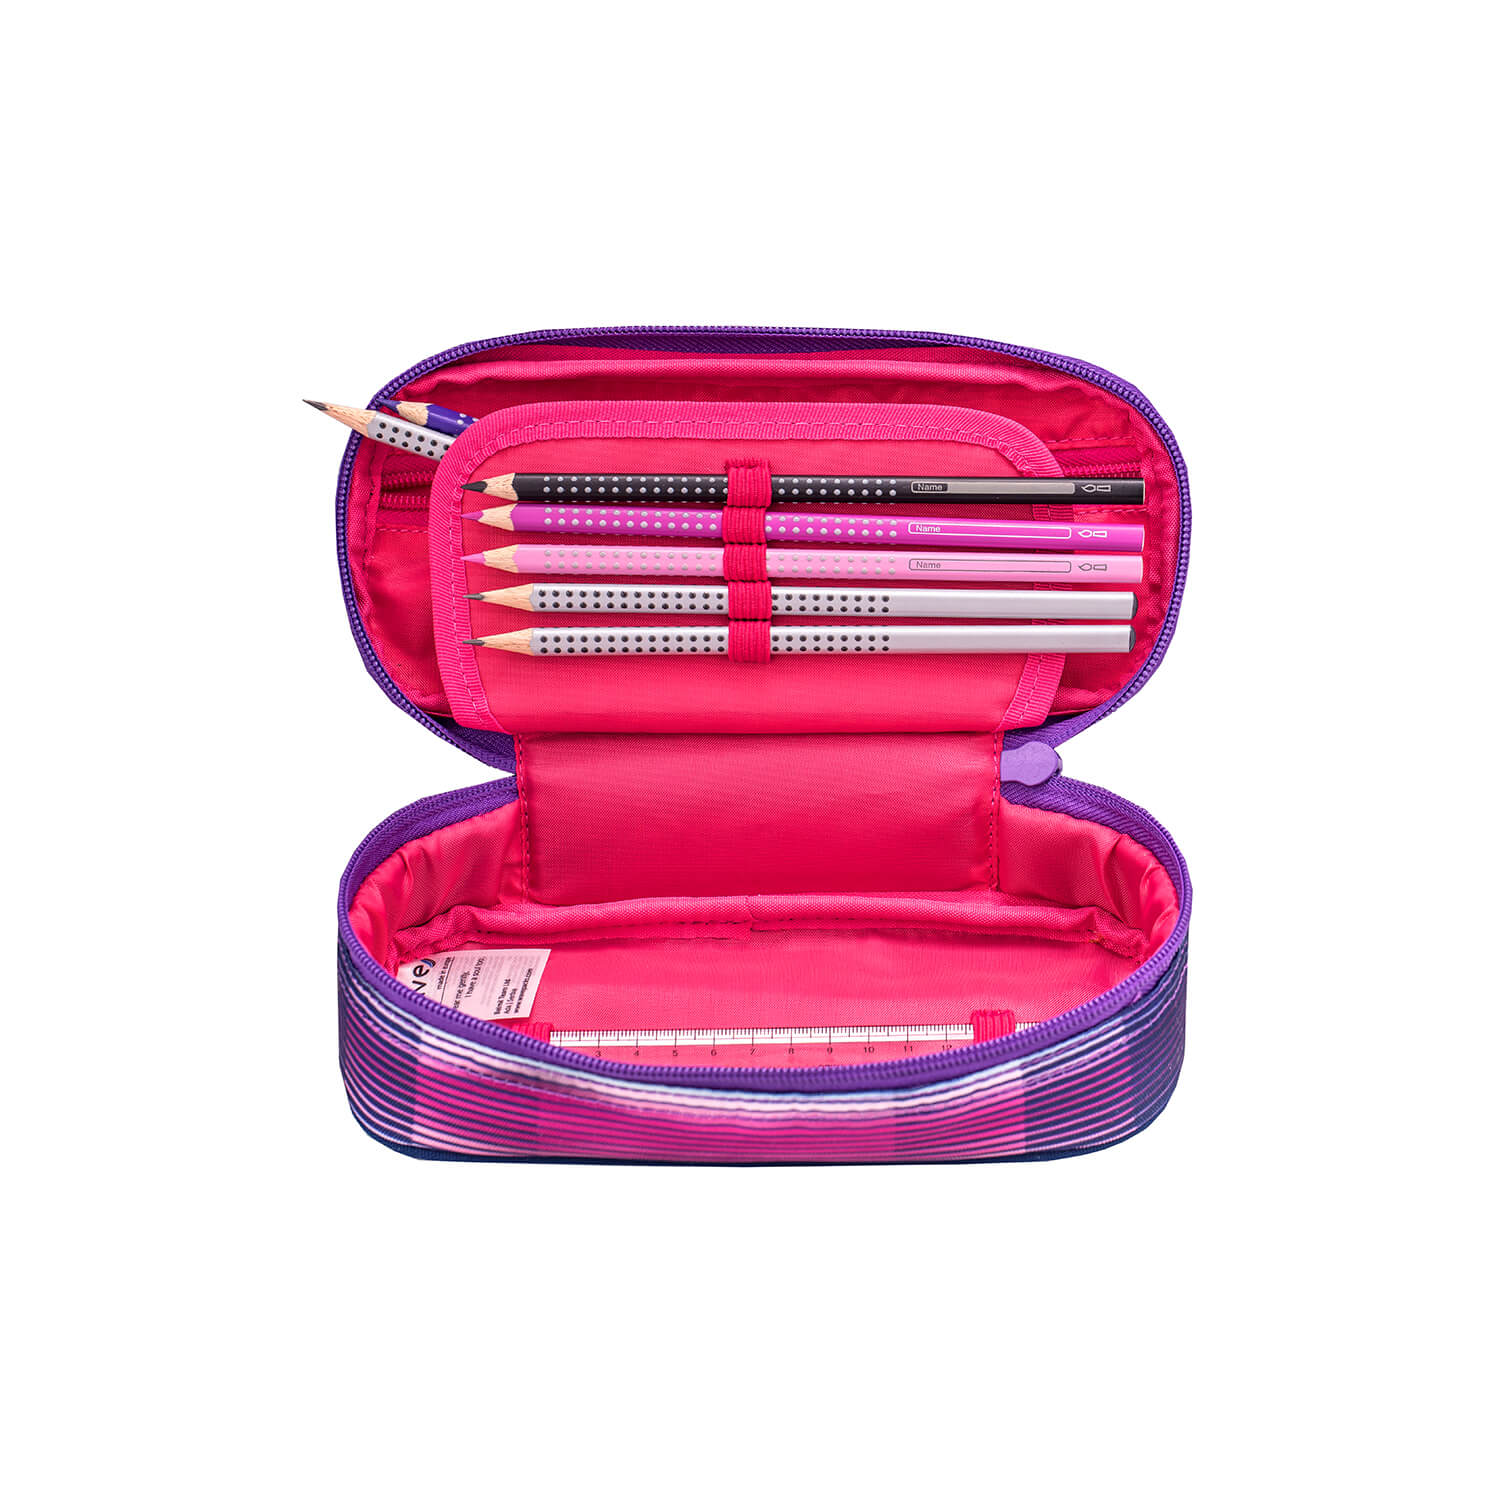 WAVE Schlamperbox Cubic Pink - Coloful mit GRATIS Schlamperbox